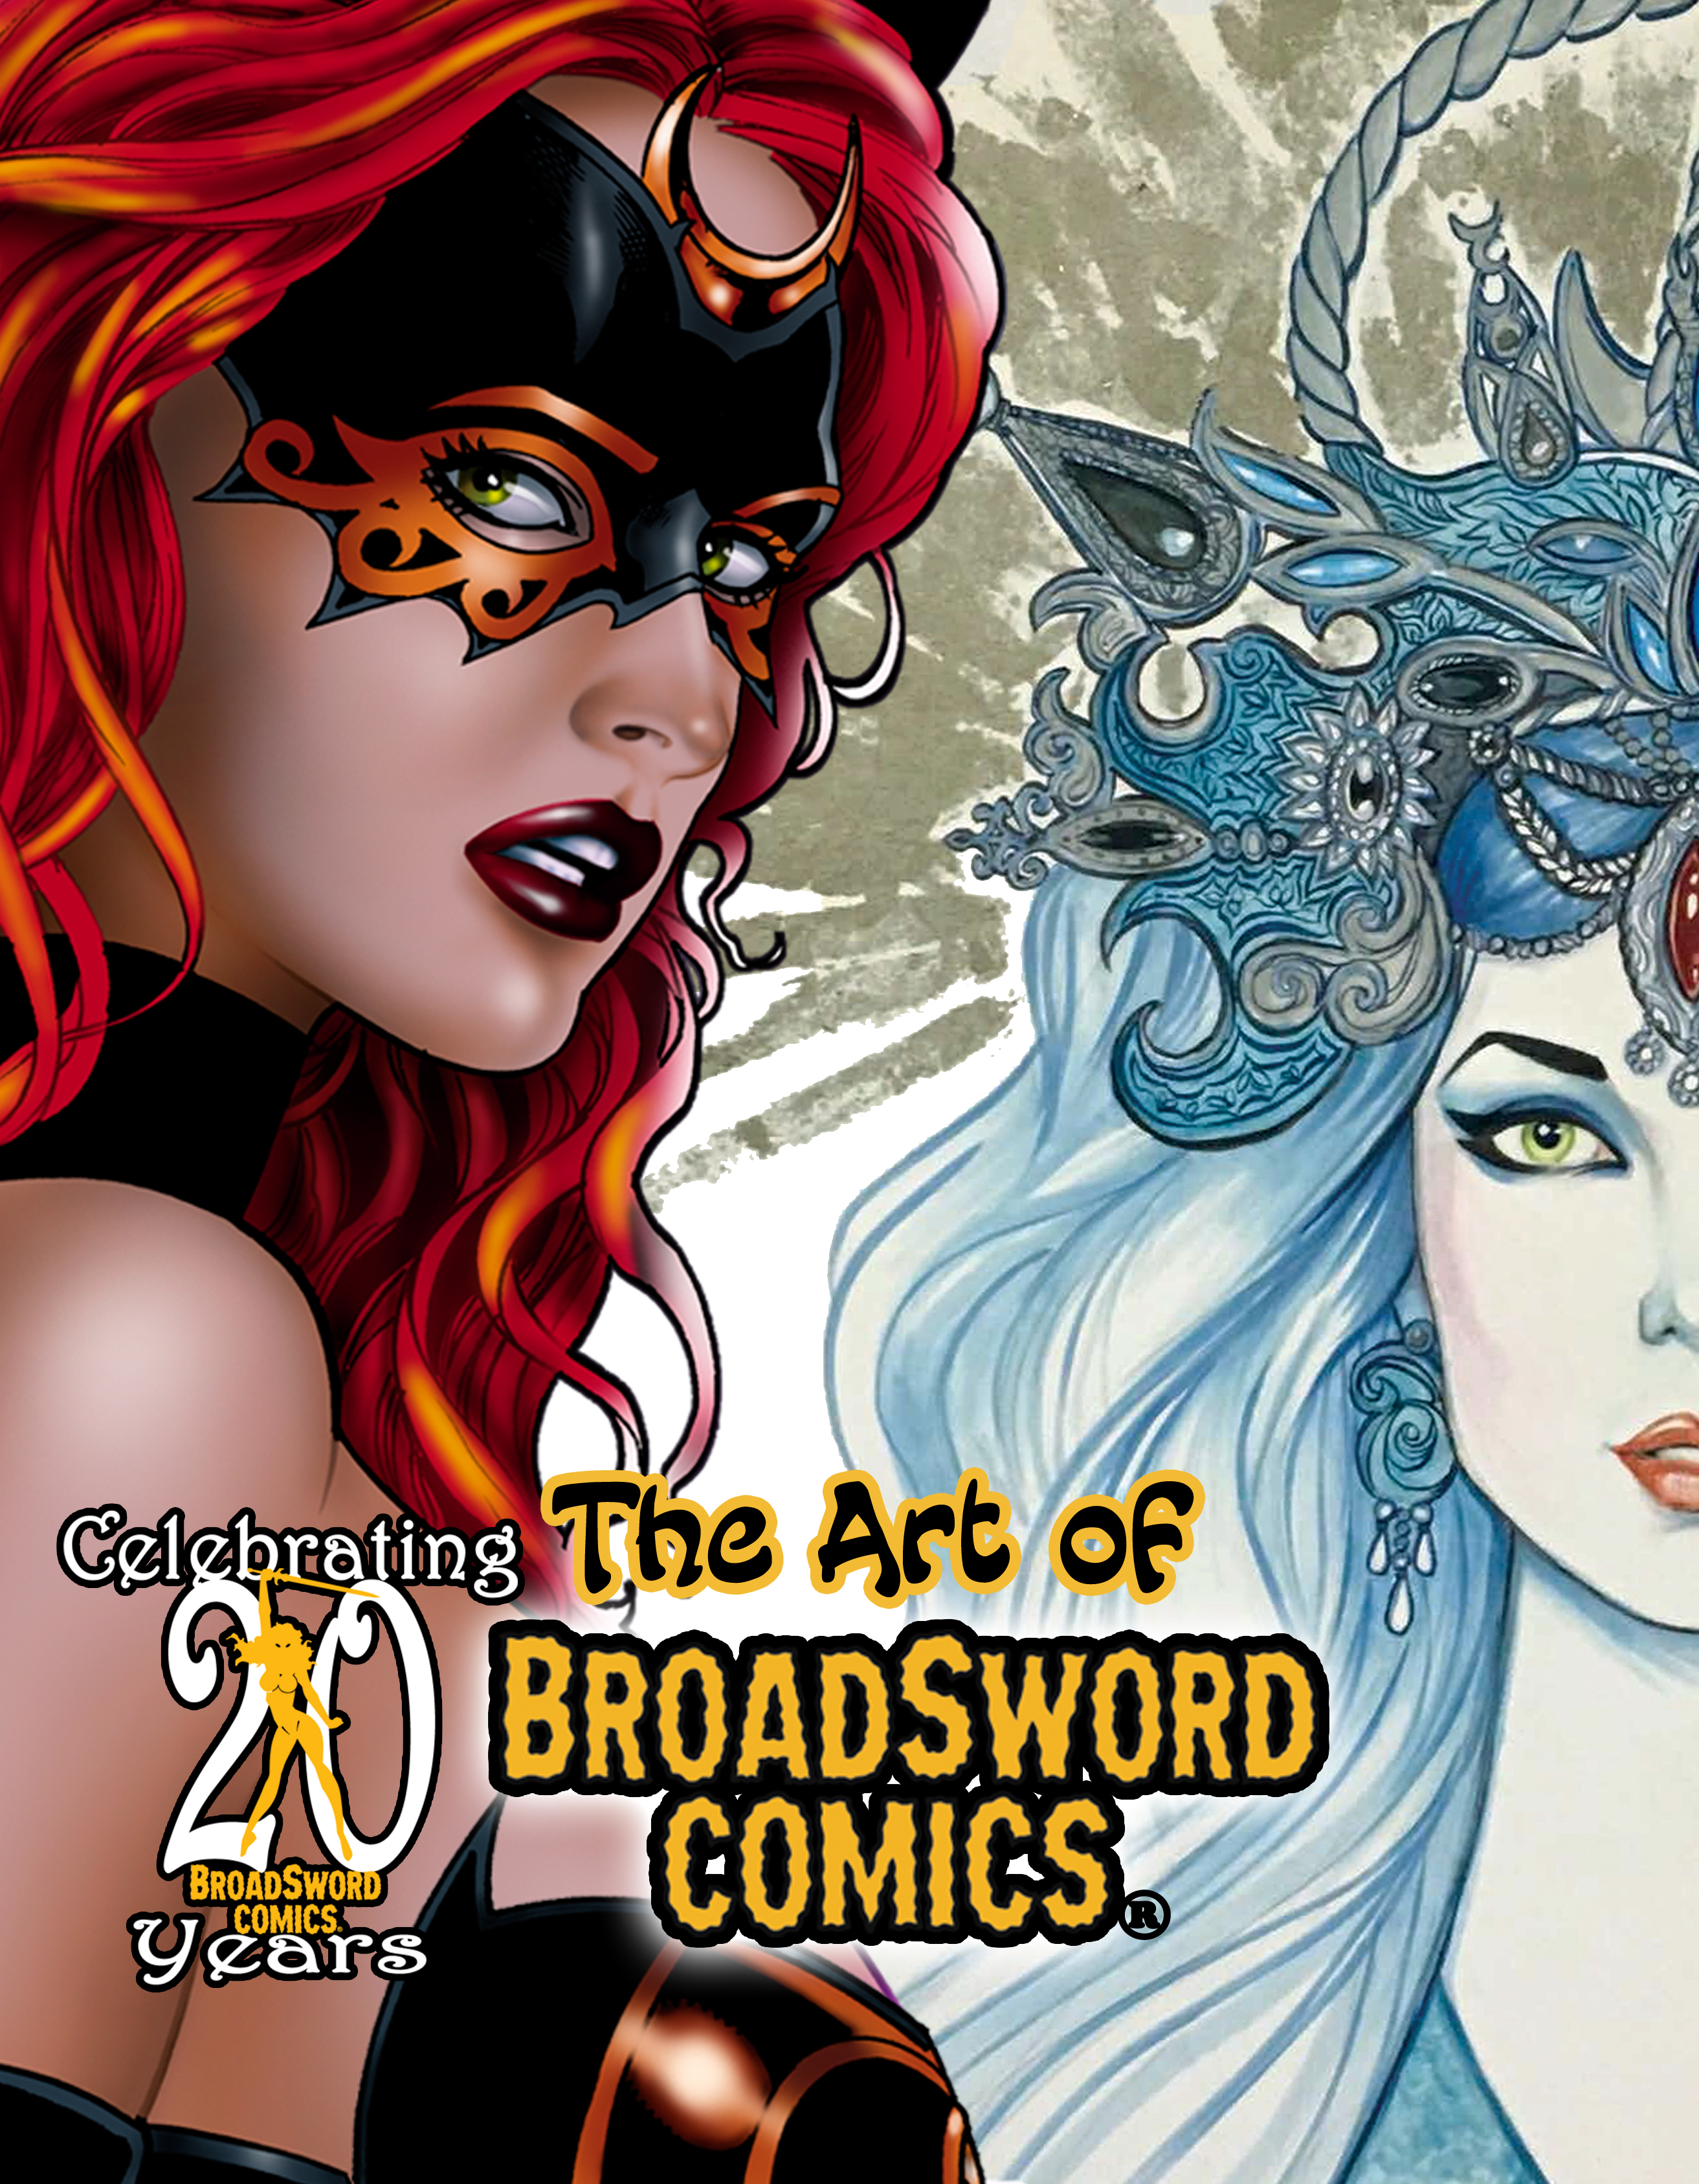 The Art of BroadSword Comics